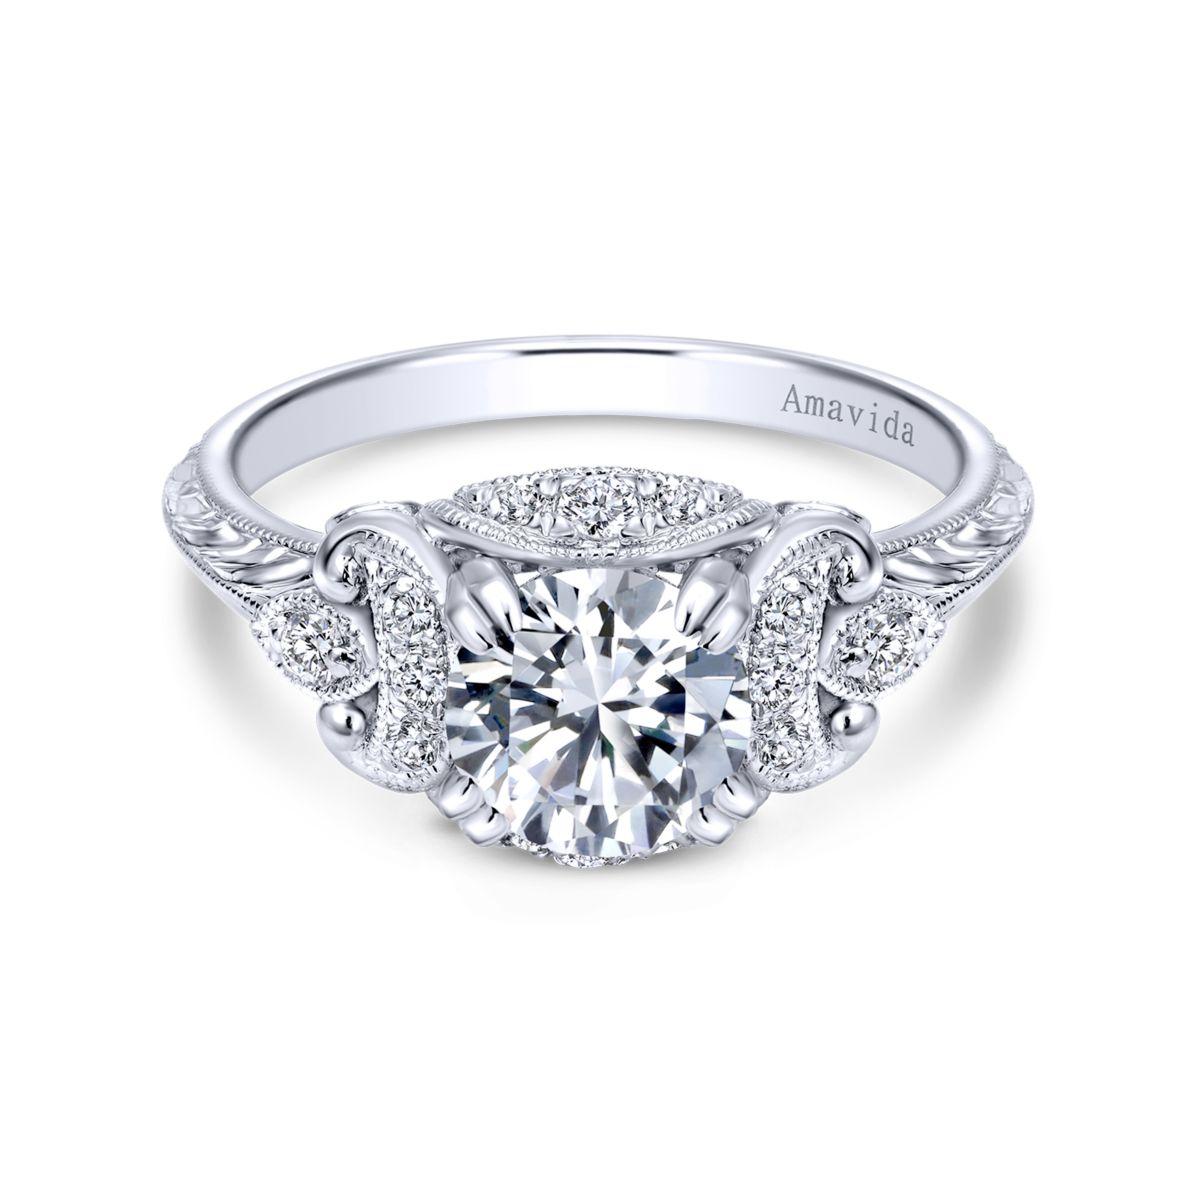 Unique 18K White Gold Vintage Inspired Diamond Halo Engagement Ring